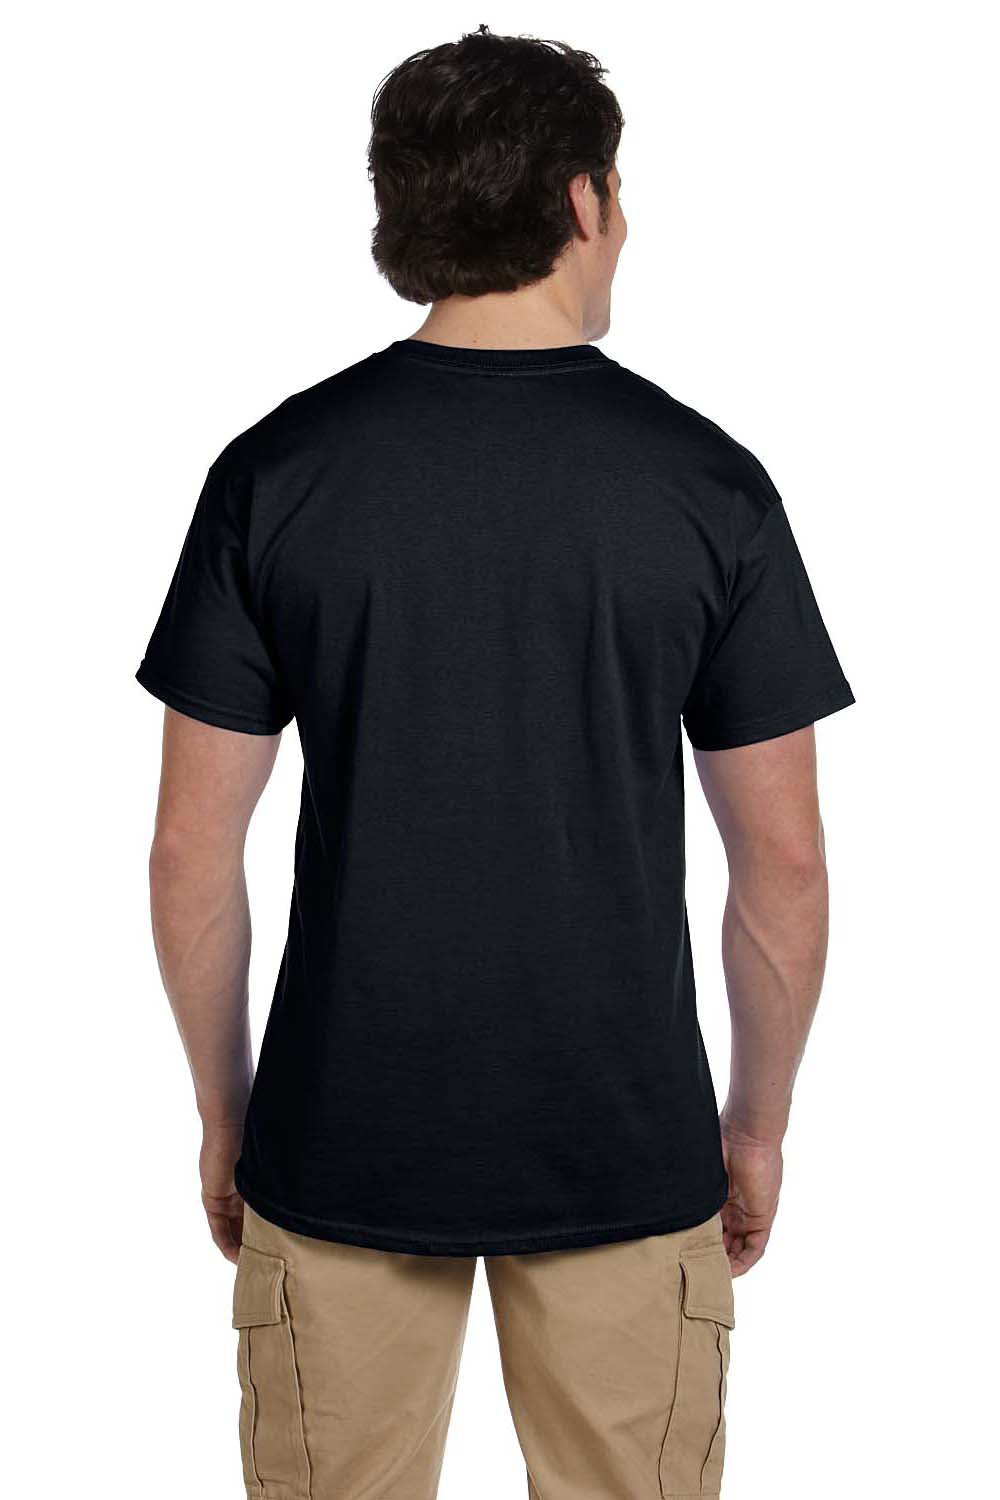 Hanes 5170 Mens EcoSmart Short Sleeve Crewneck T-Shirt Black Back